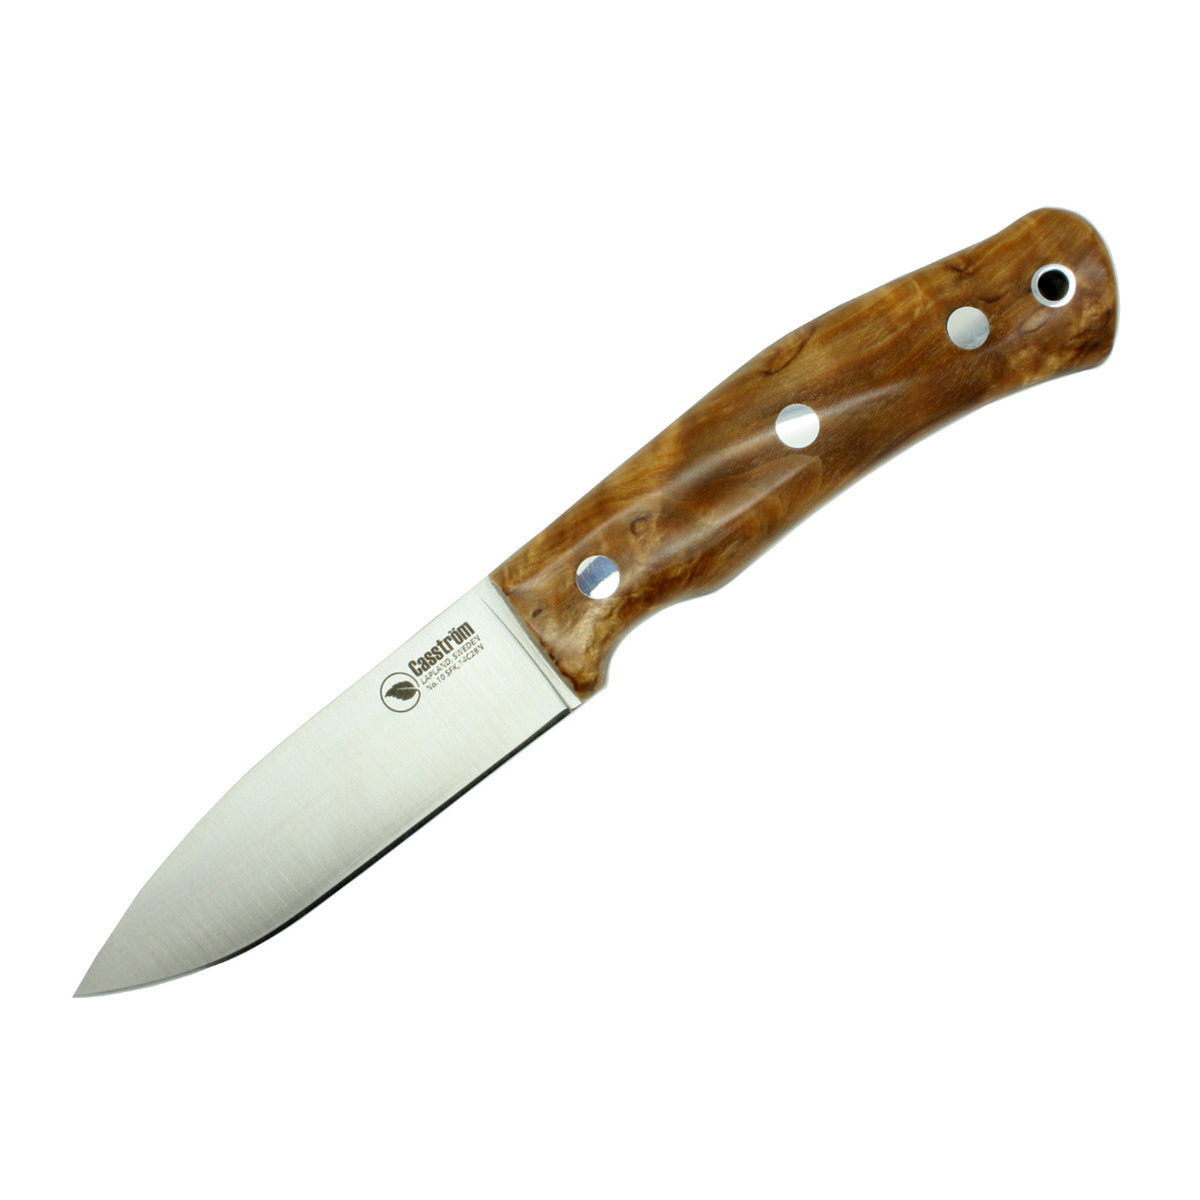 Casstrom No.10 Forest Knife